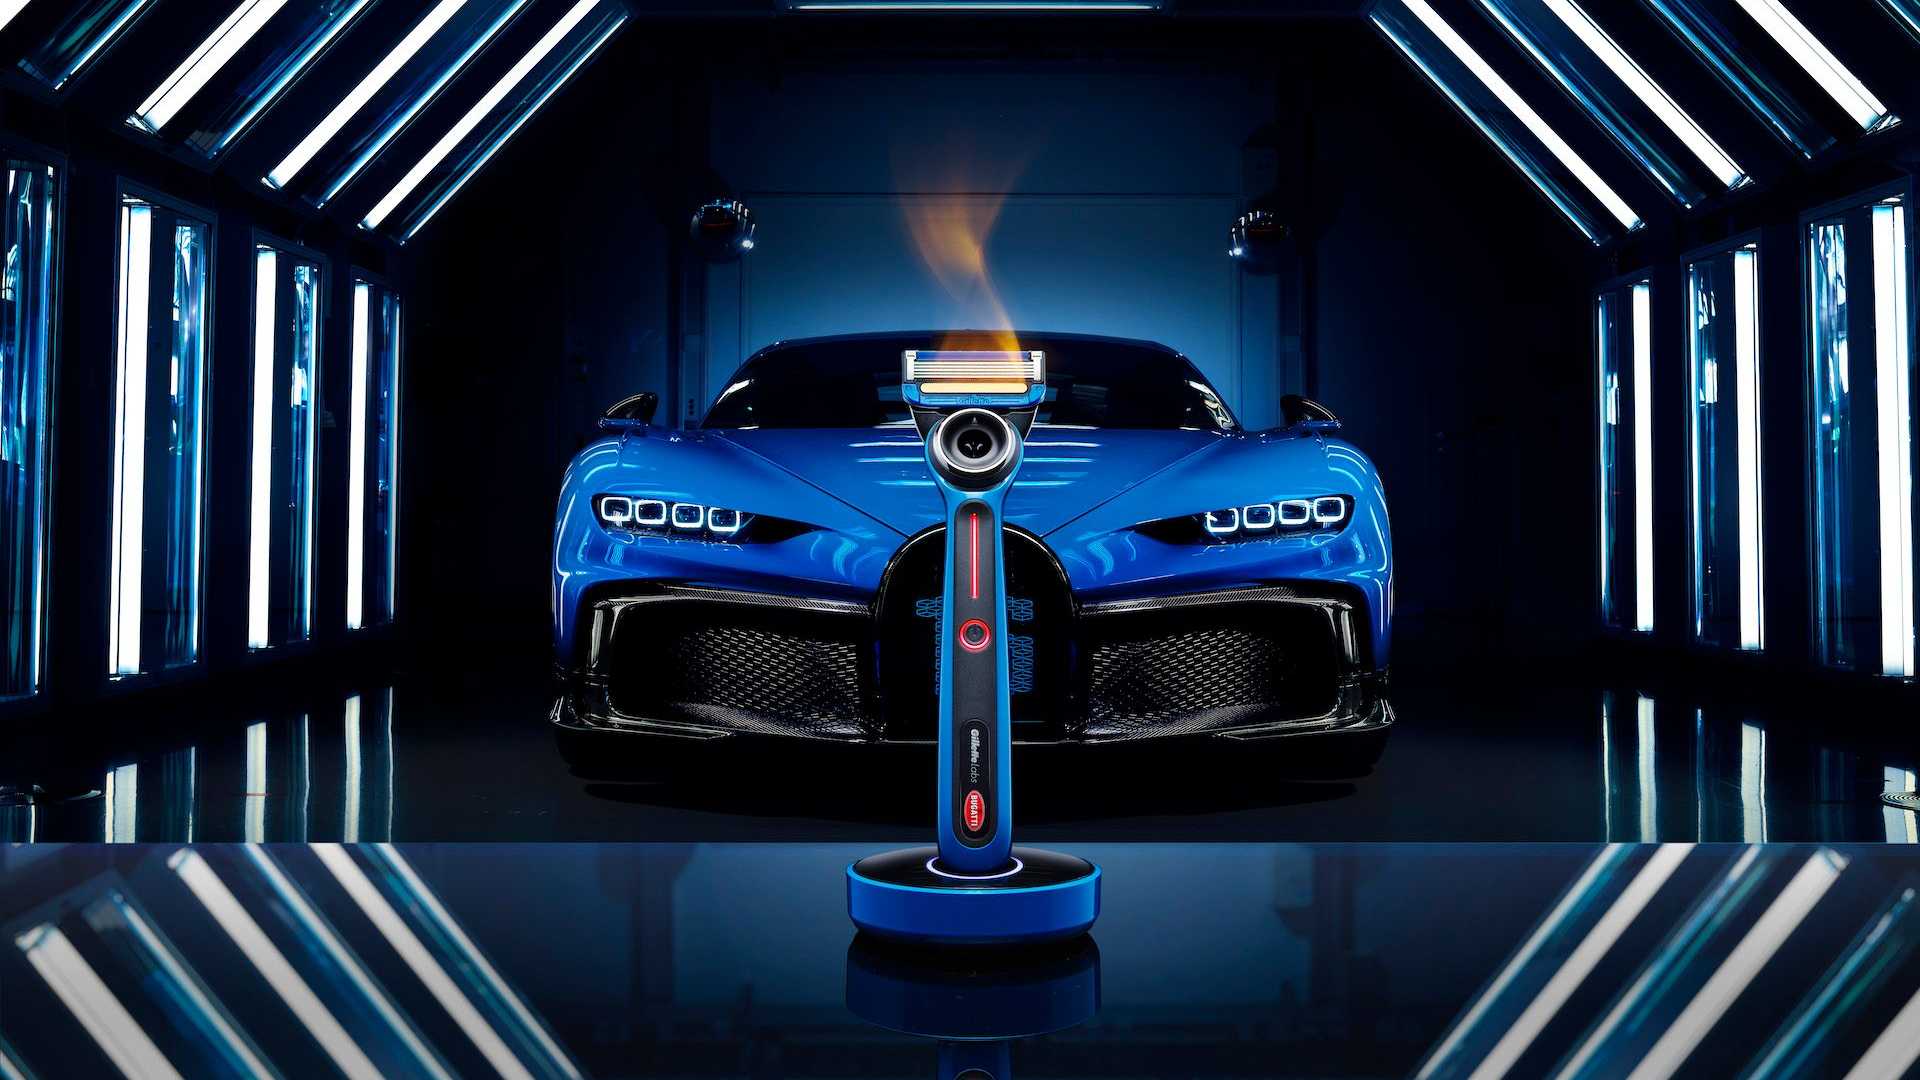 gillettelabs-x-bugatti-special-edition-heated-razor (2).jpg